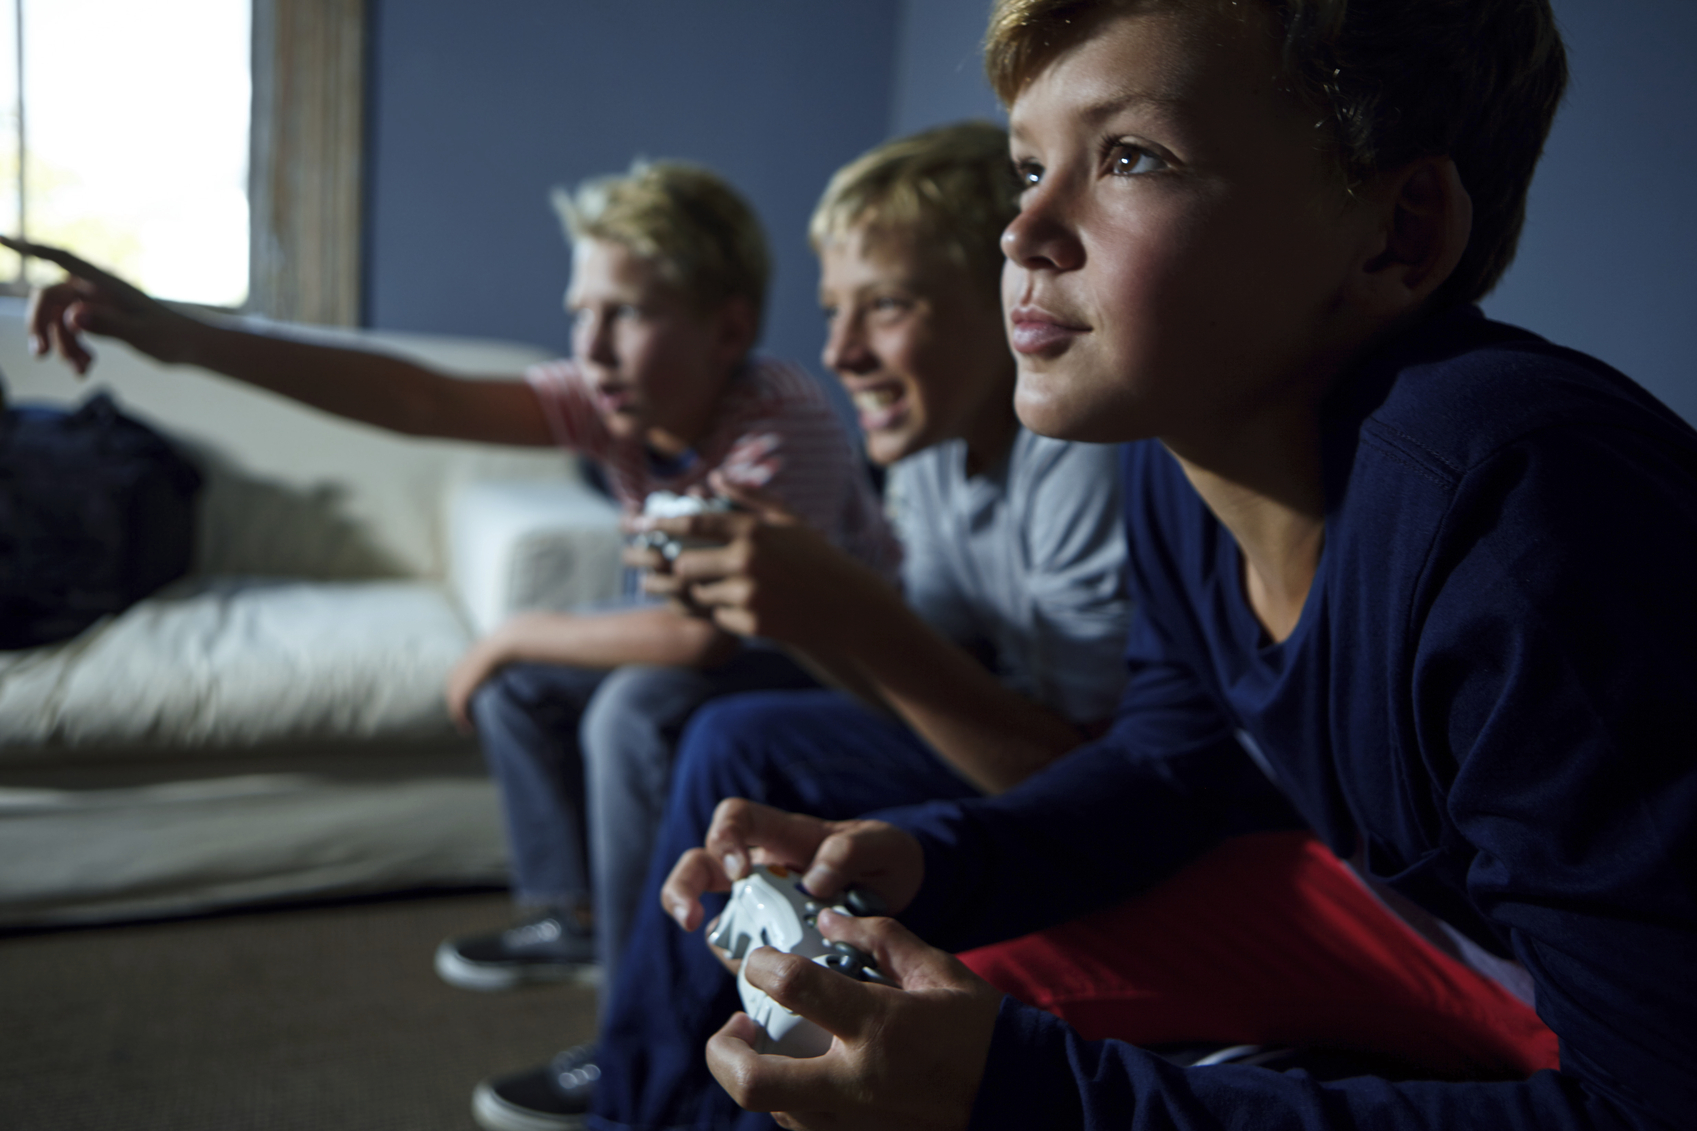 Shot of young boys playing video gameshttp://195.154.178.81/DATA/i_collage/pu/shoots/804936.jpg